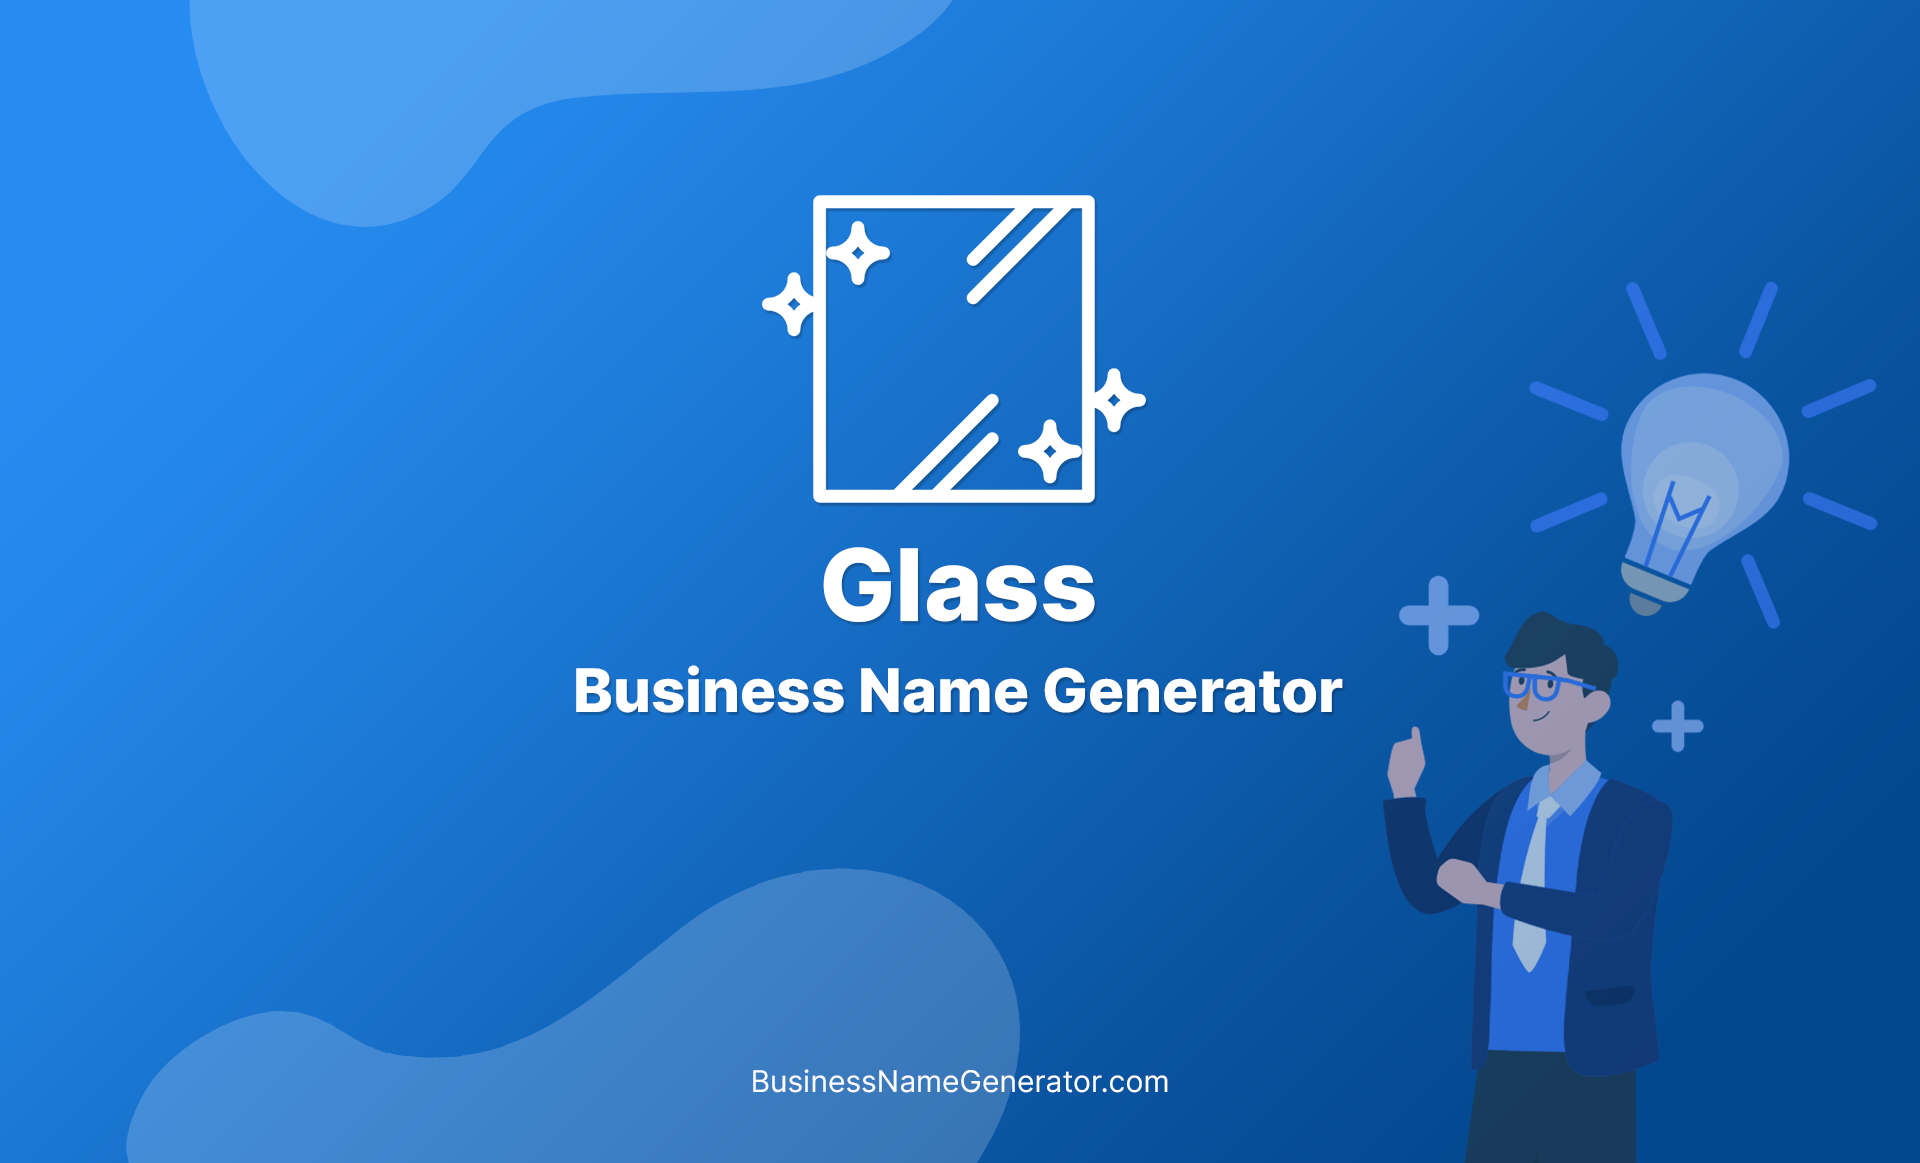 Glass Business Name Generator